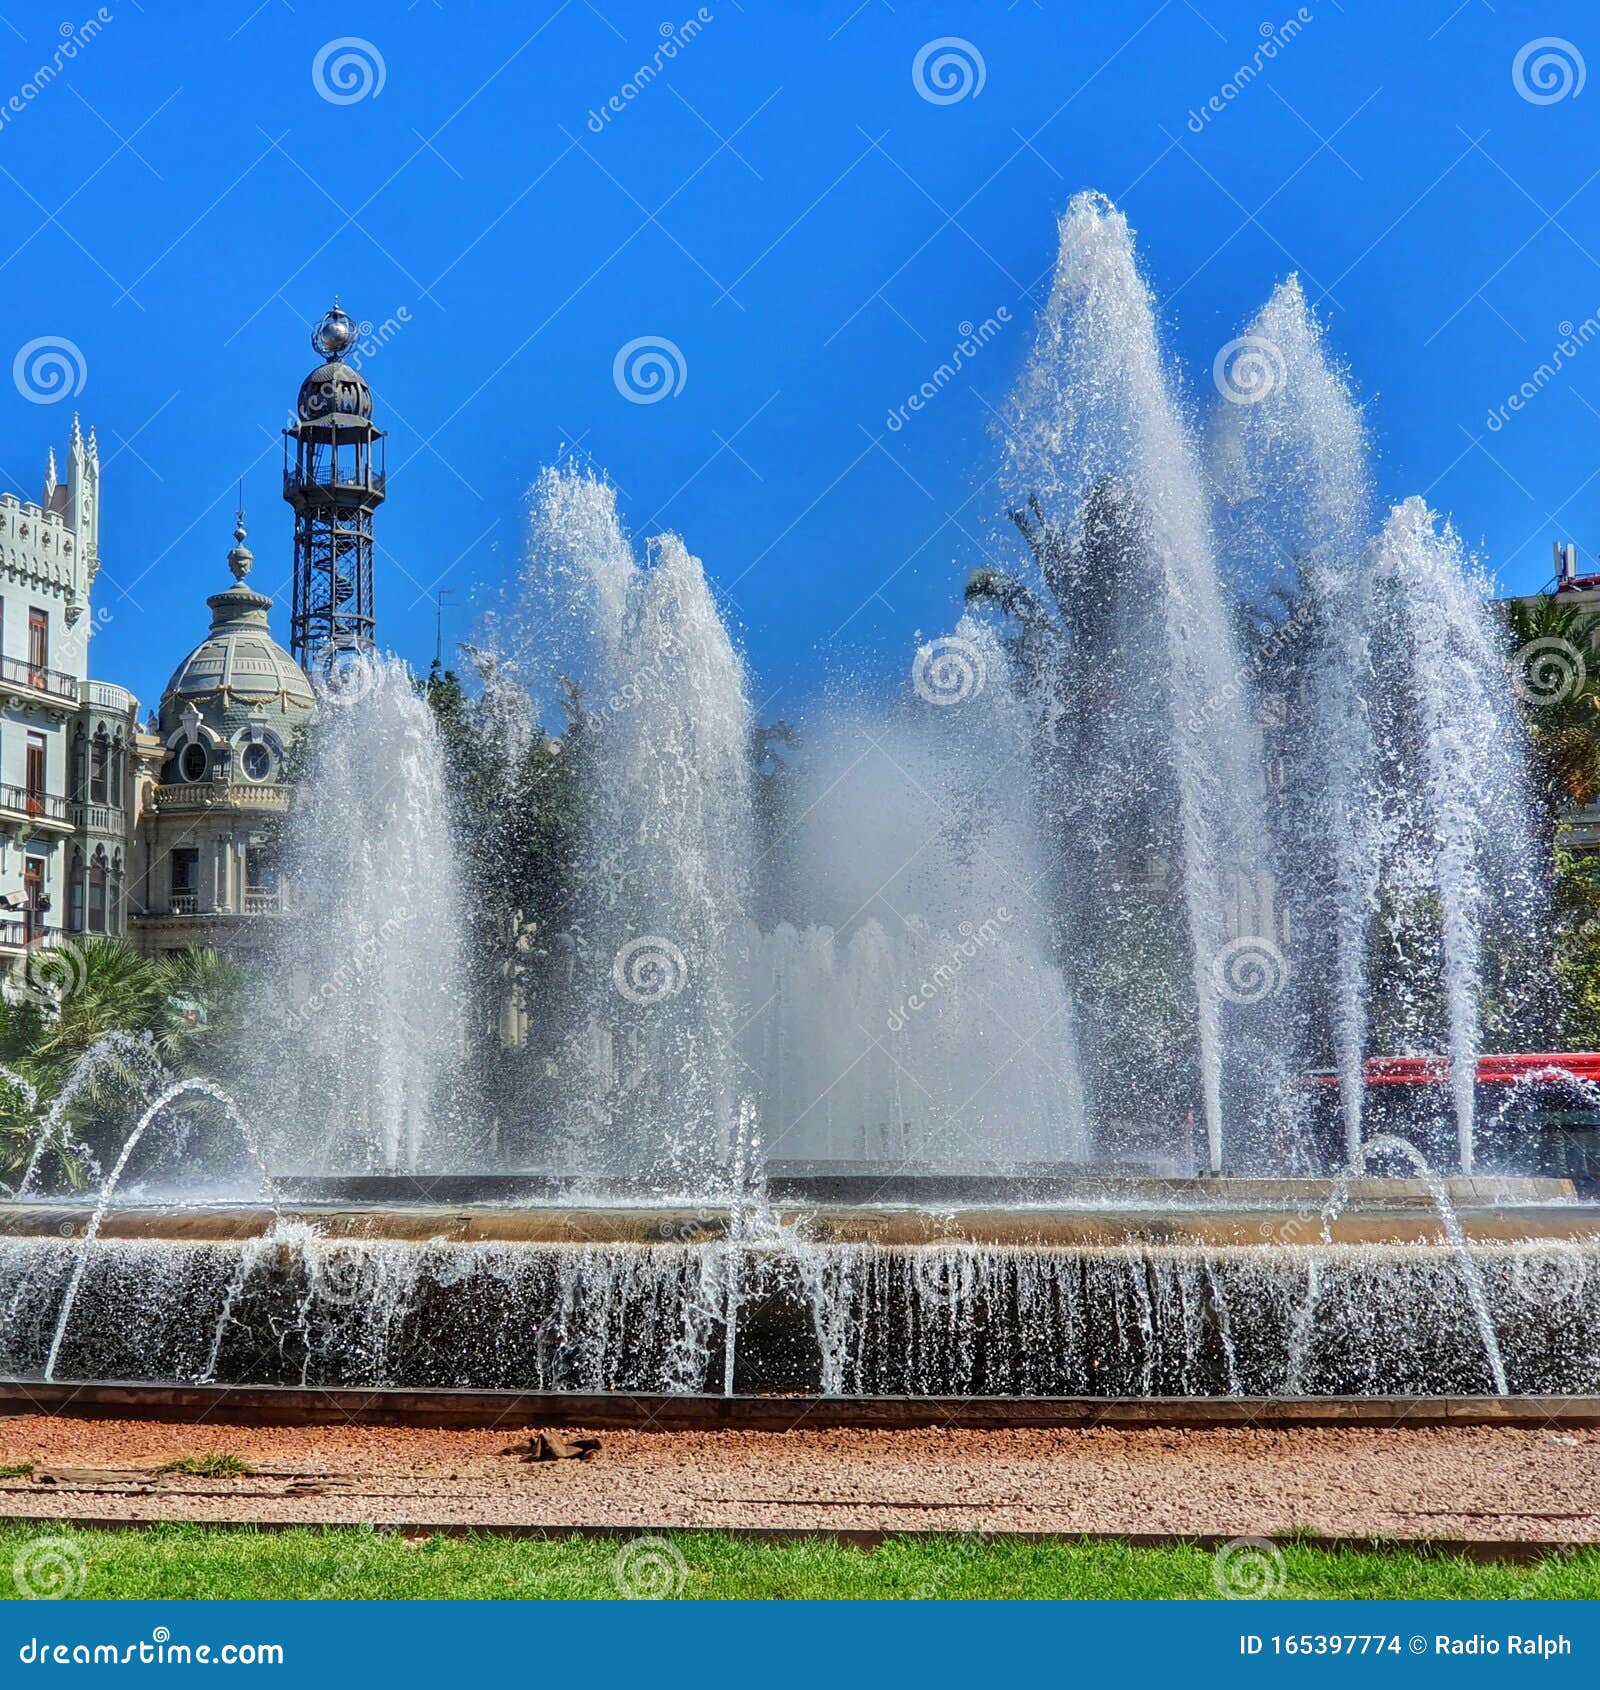 valencia espania spain fountain water blue sky